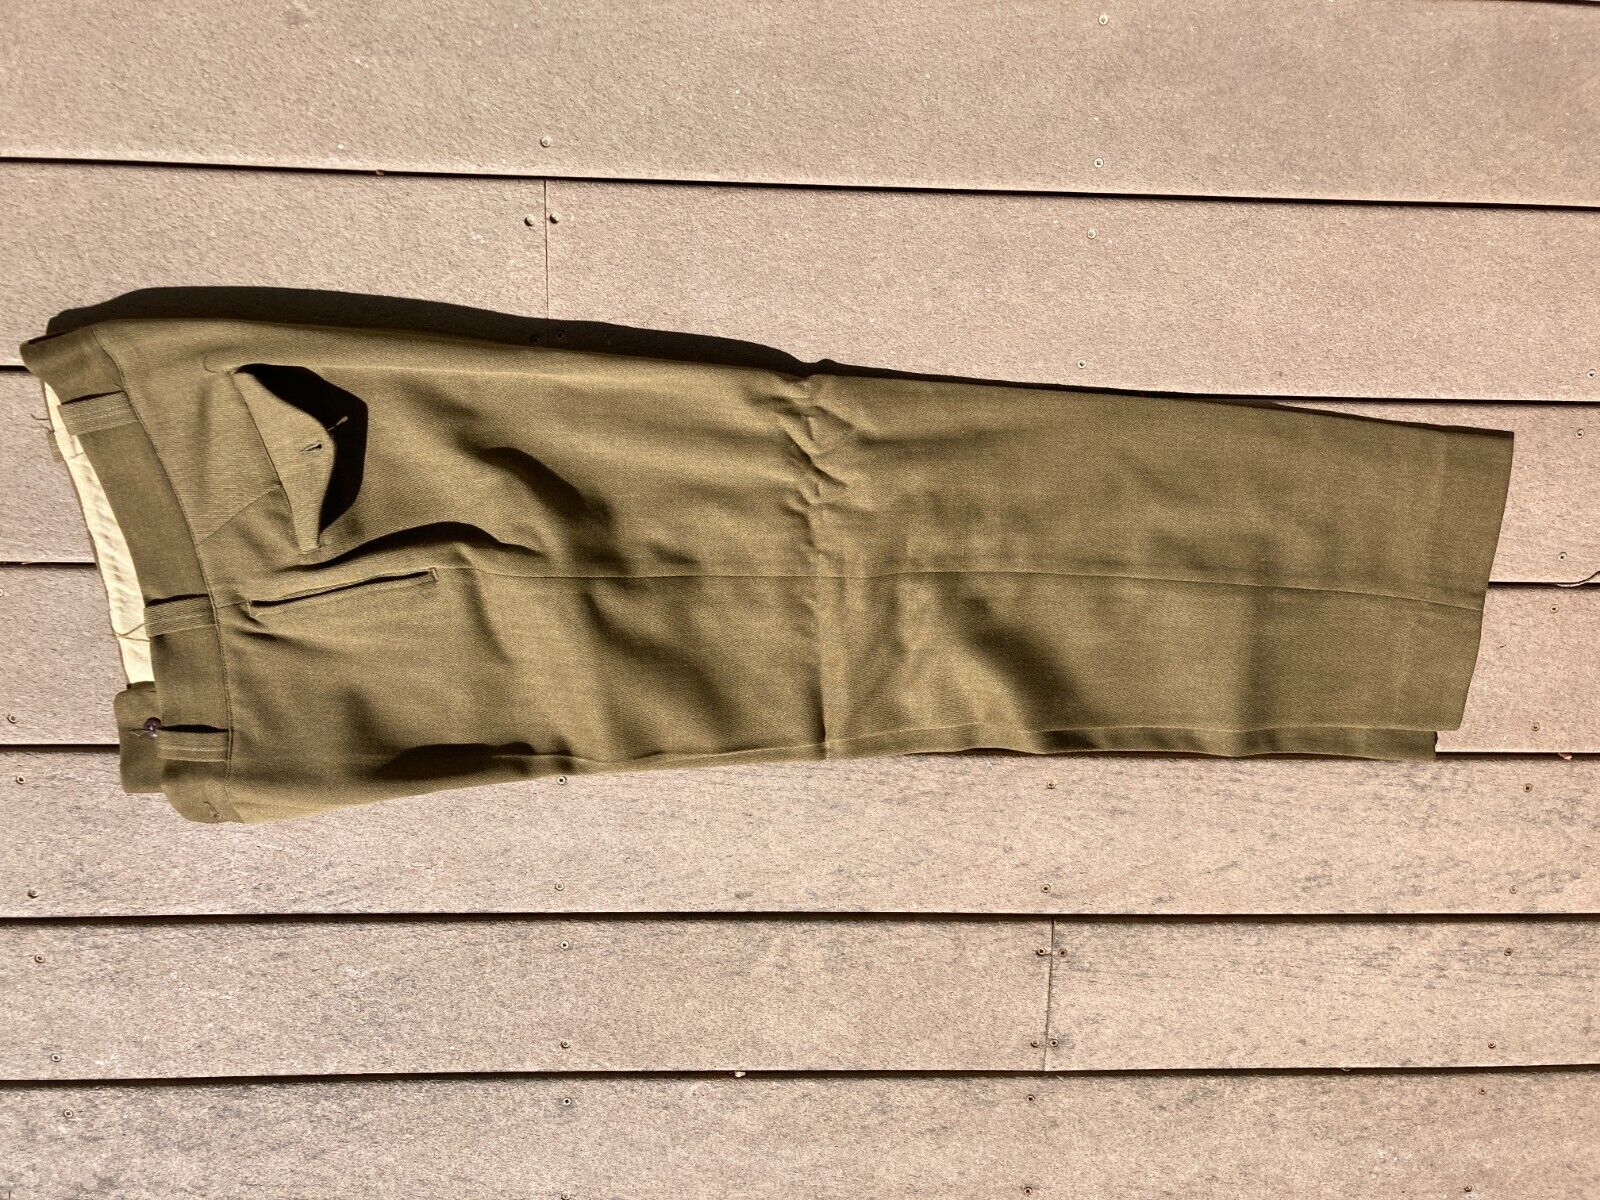 Early / Pre WW2 US Army Military Dress Uniform Trousers Pants 30x31